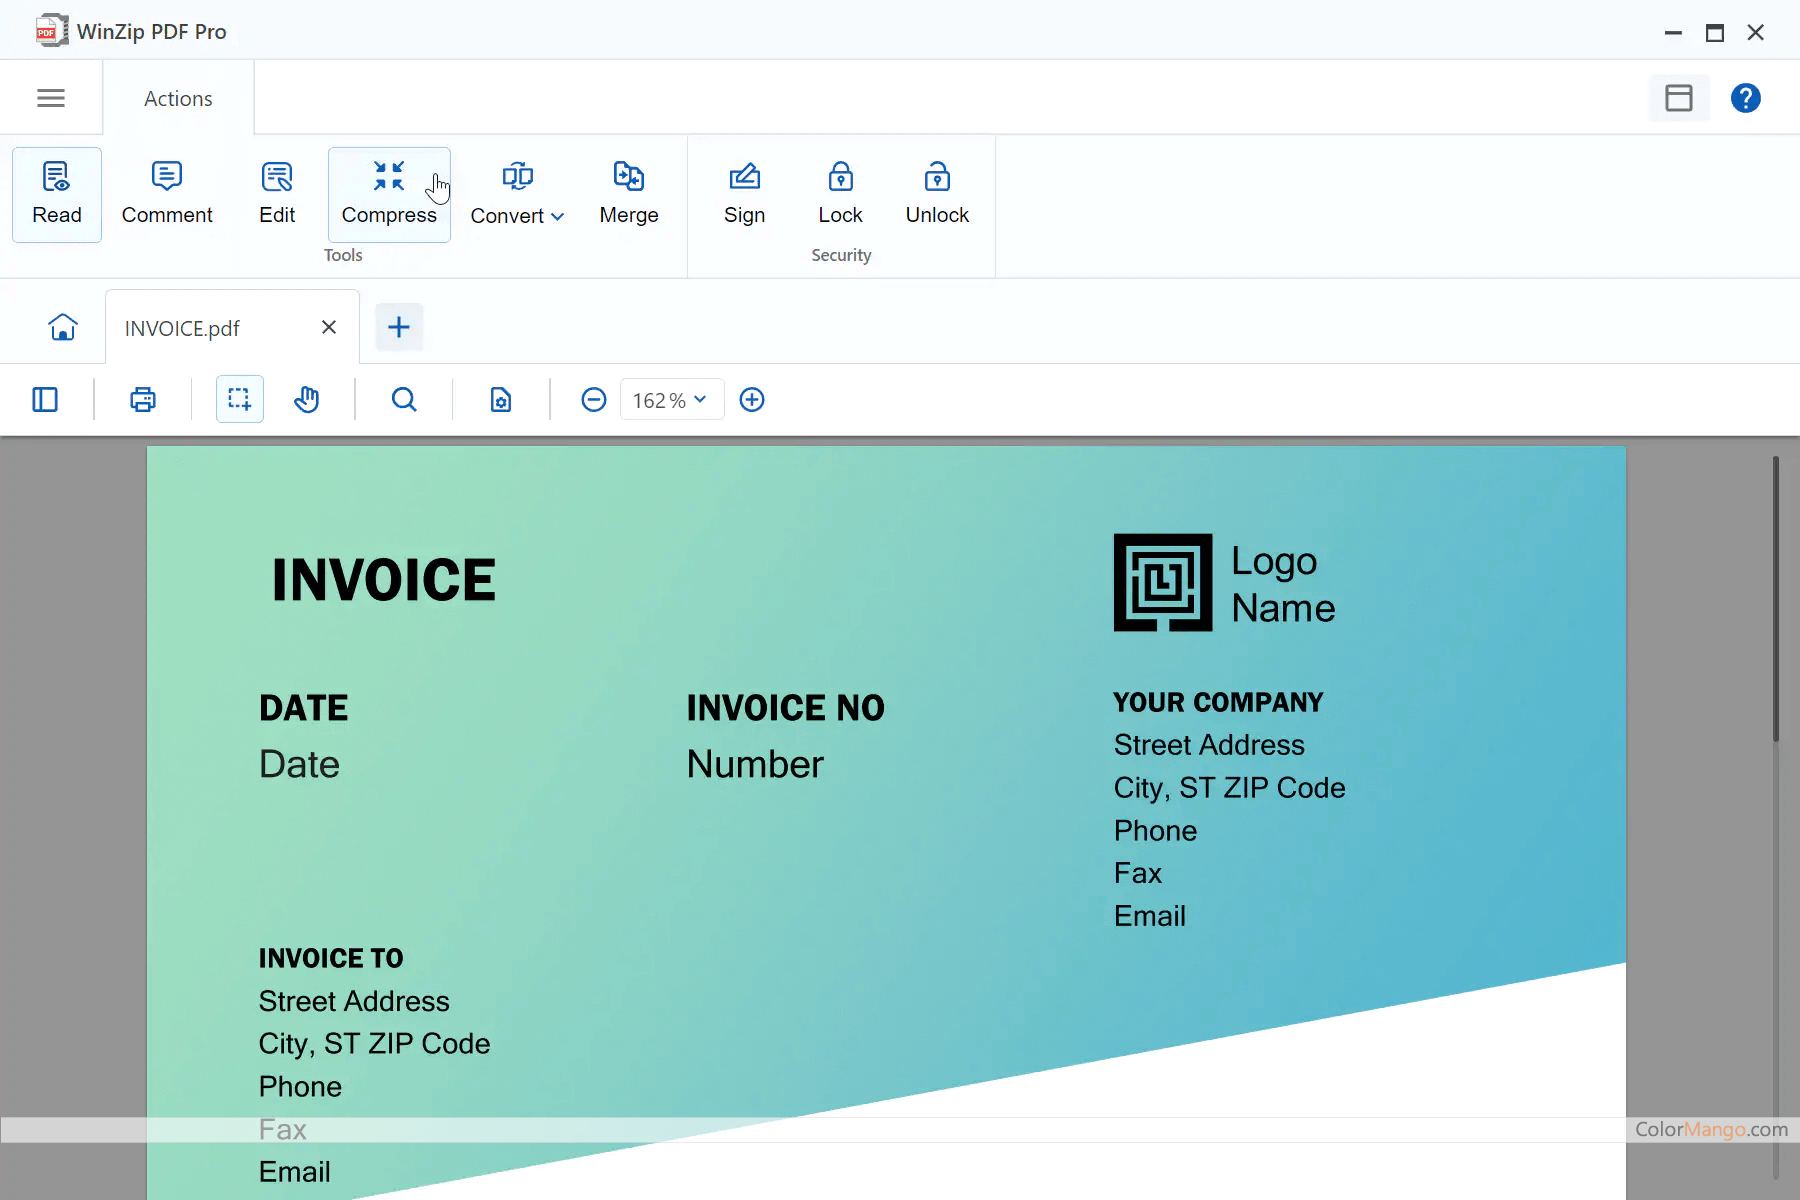 WinZip PDF Pro Screenshot